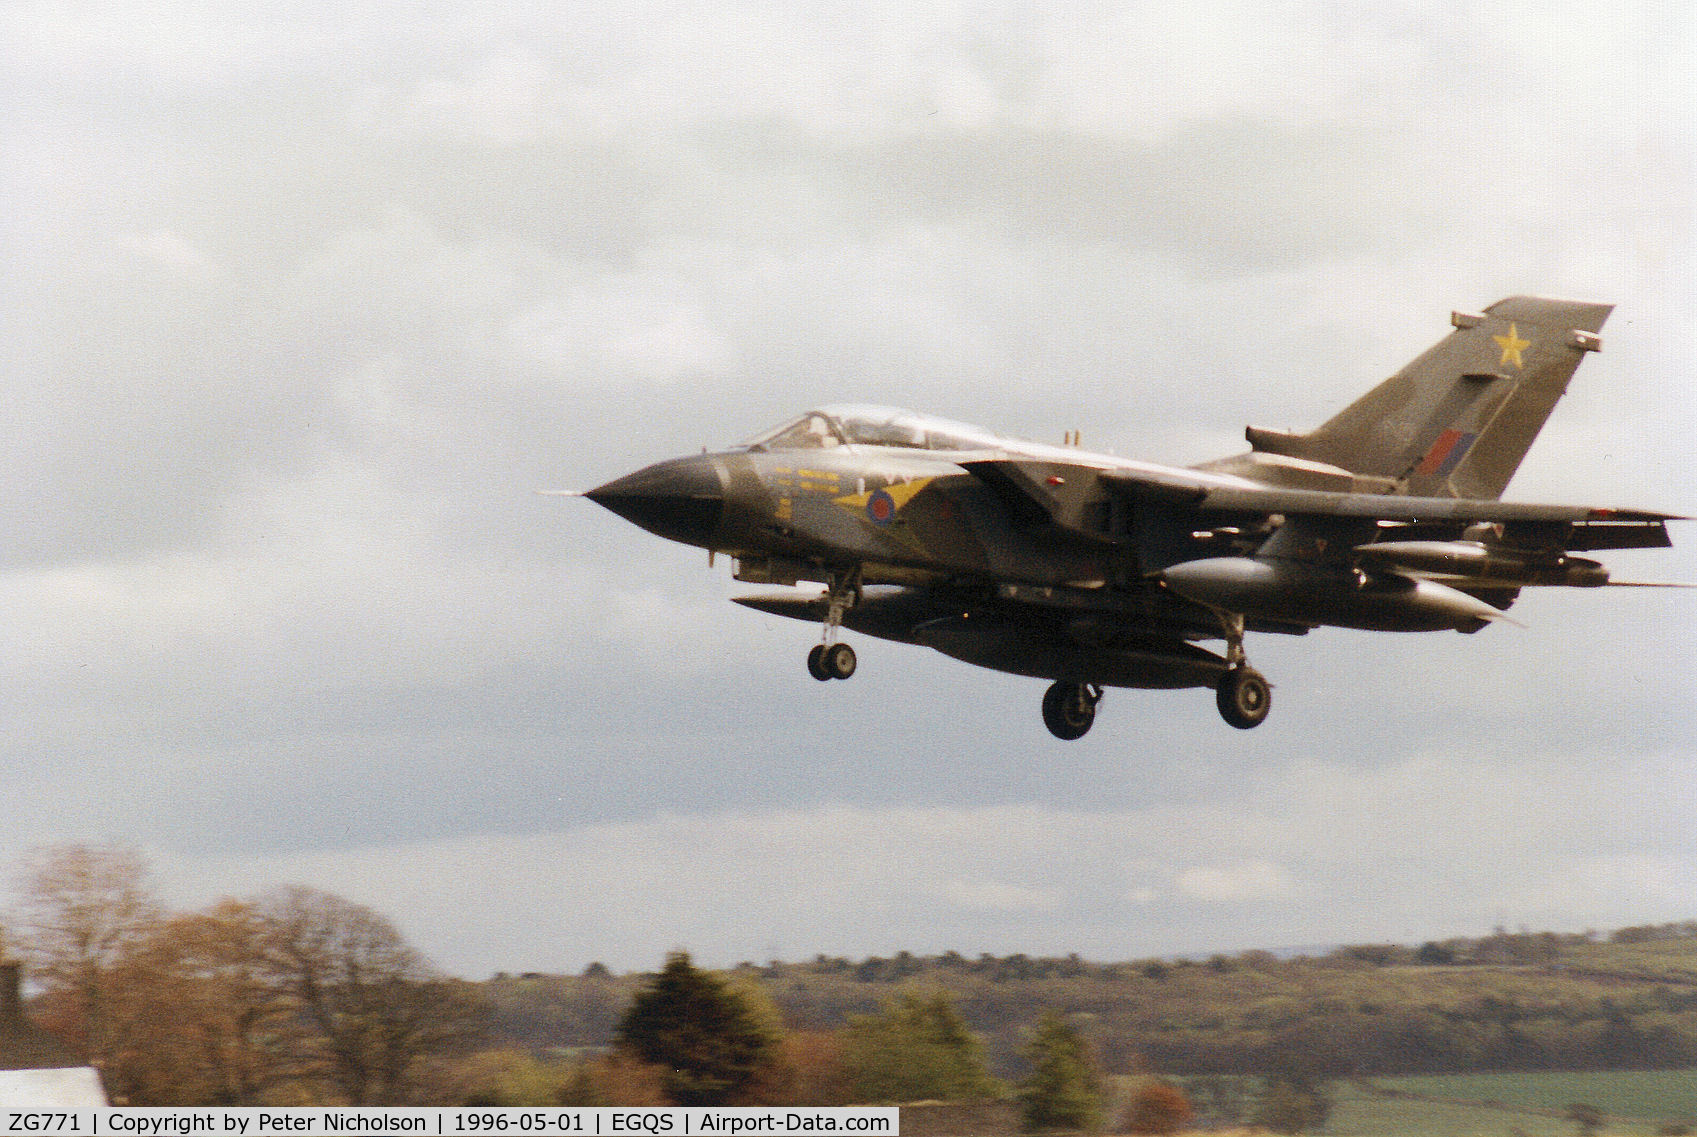 ZG771, 1991 Panavia Tornado GR.1 C/N 893/BT056/3440, Tornado GR.1 of 31 Squadron at RAF Bruggen on final approach to Runway 05 at RAF Lossiemouth in May 1996.